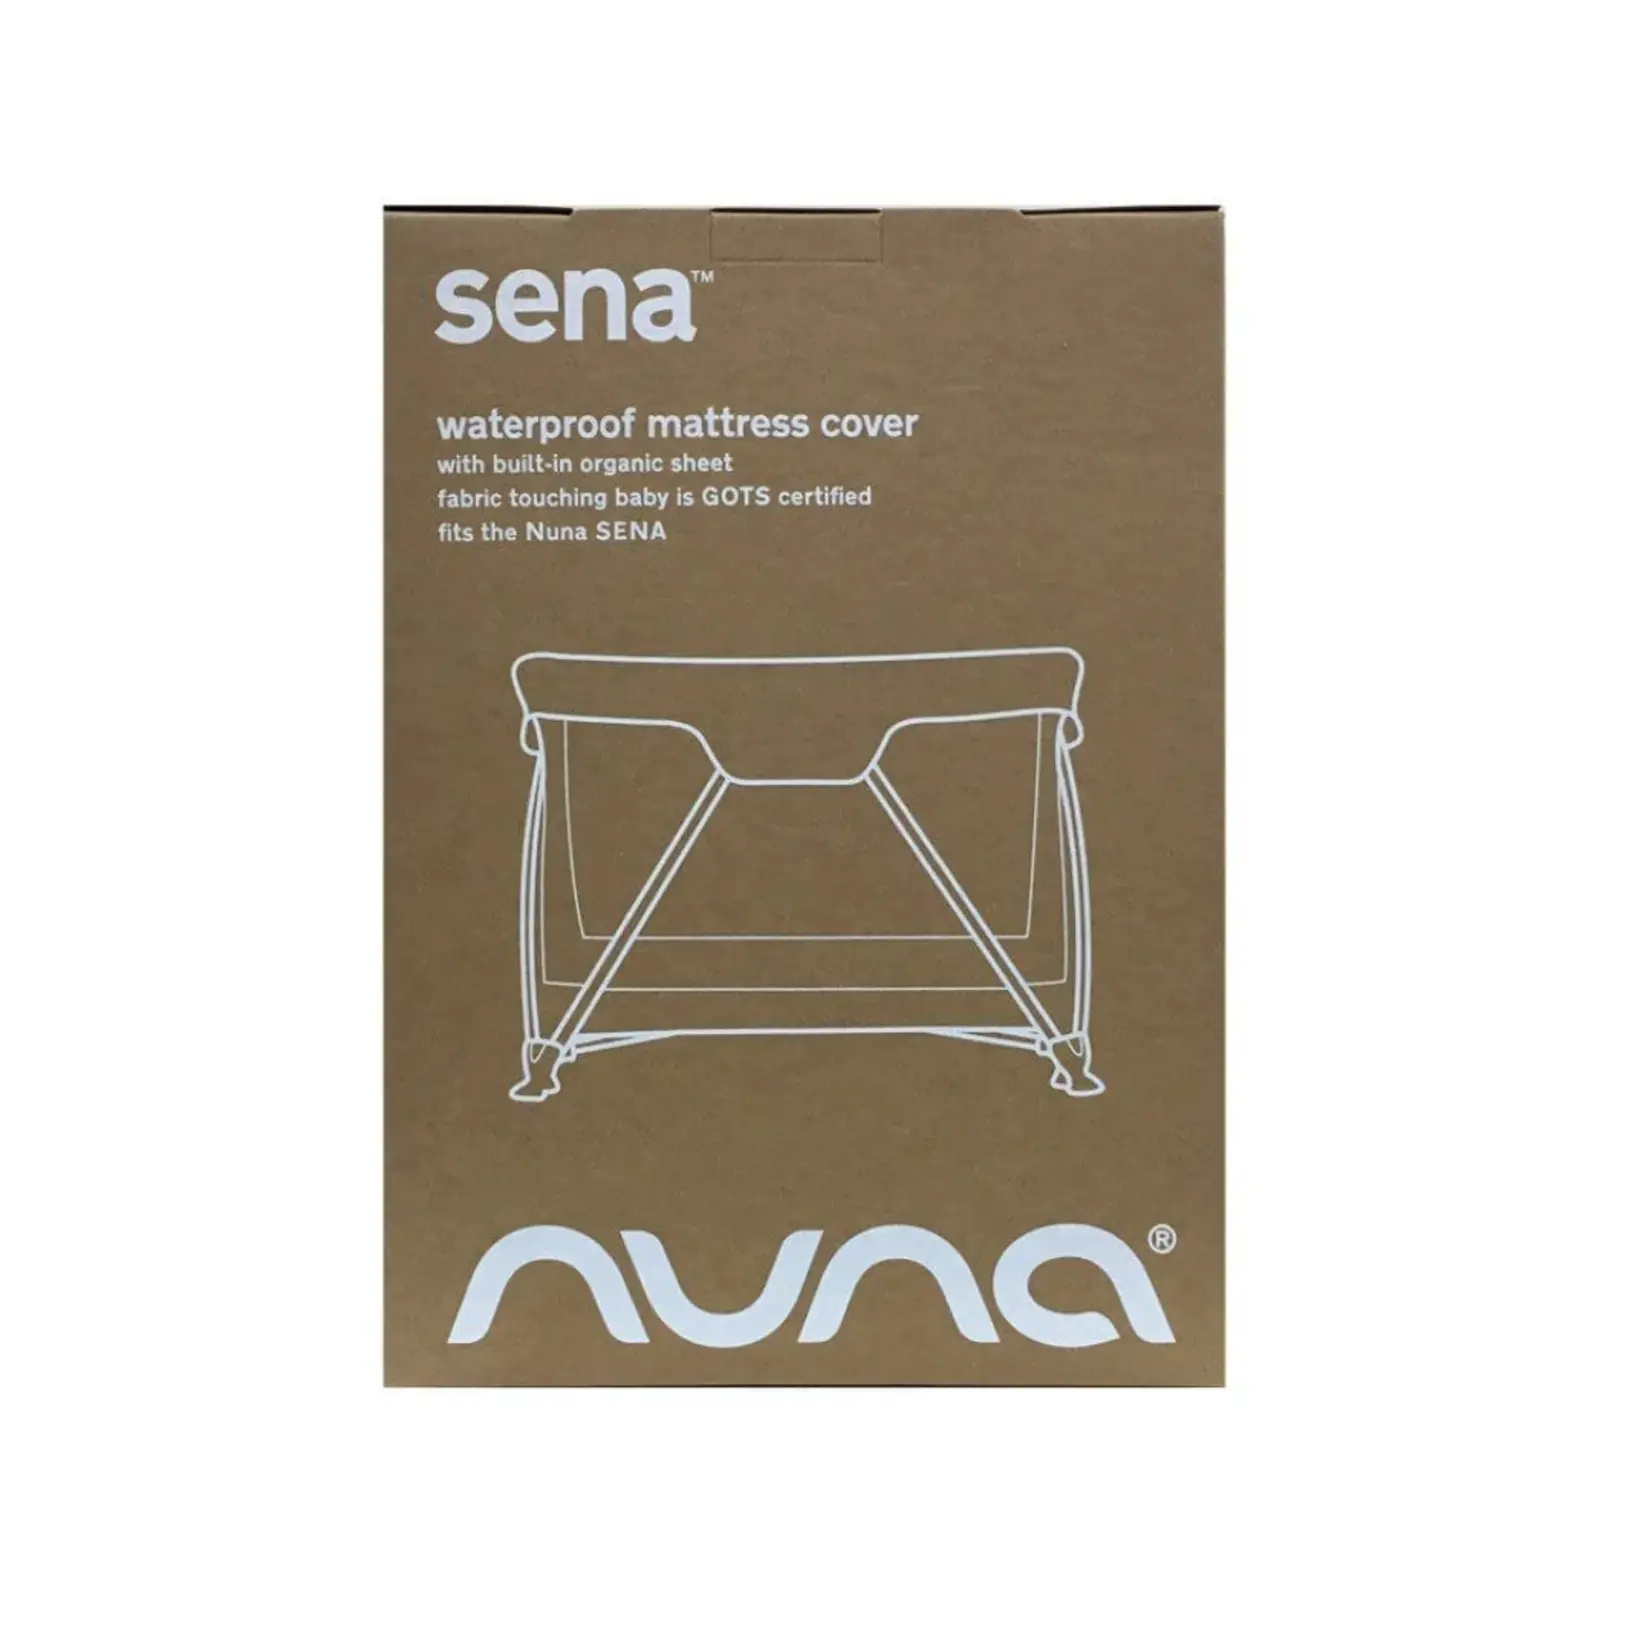 Nuna NUNA SENA WATERPROOF MATTRESS COVER